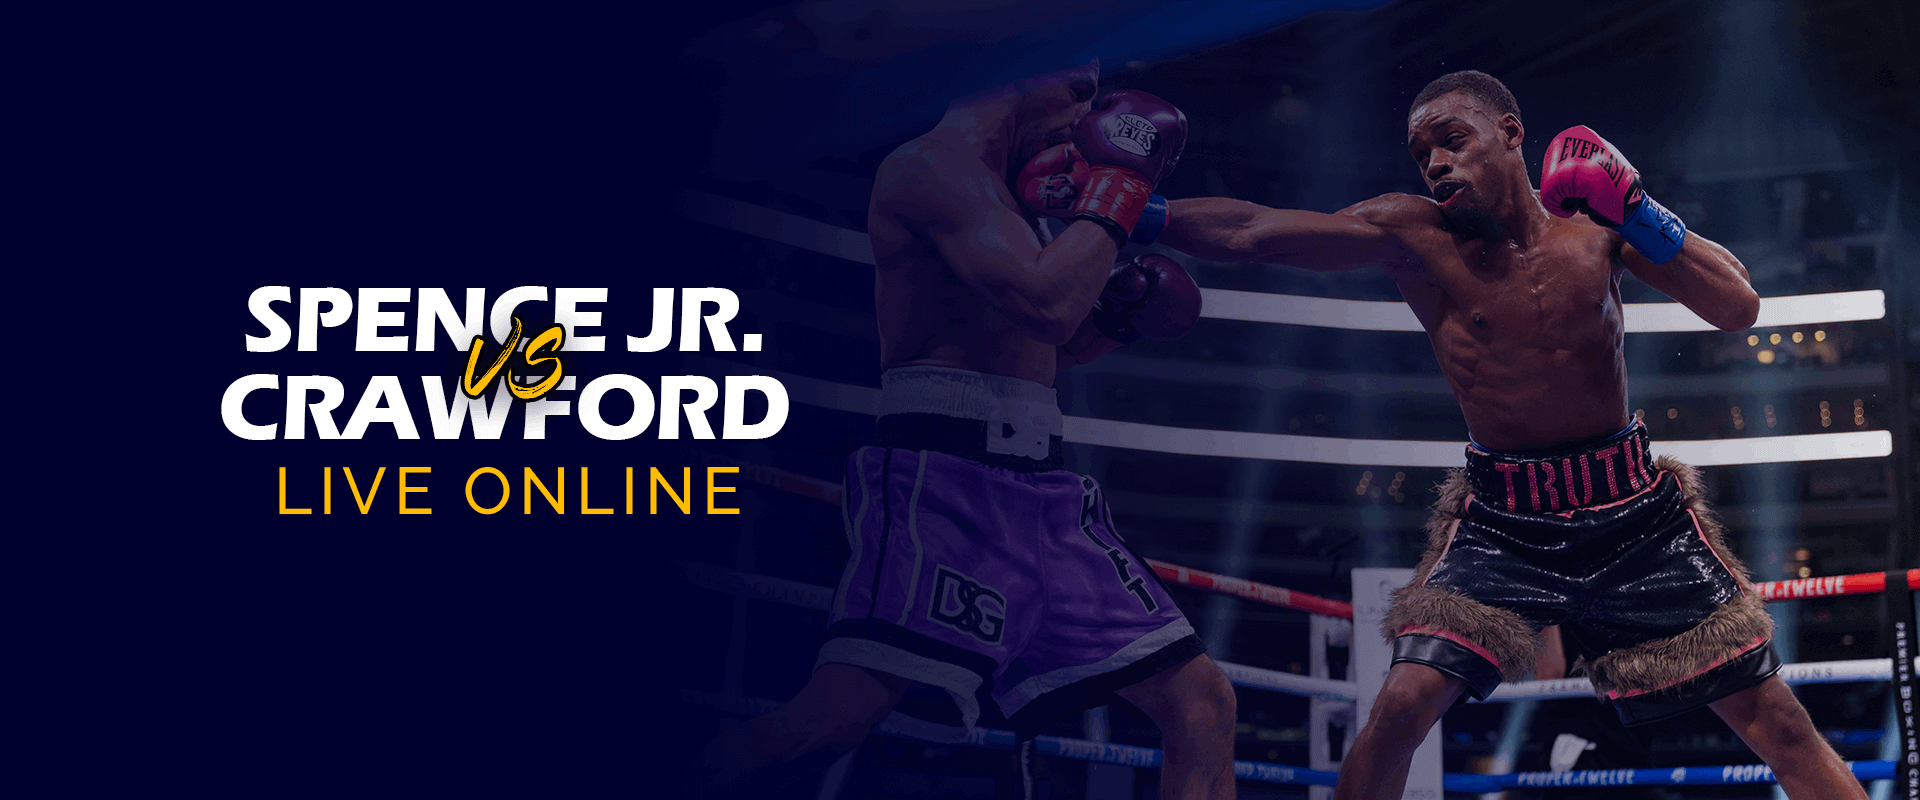 Watch Errol Spence Jr. vs Terence Crawford Live Online